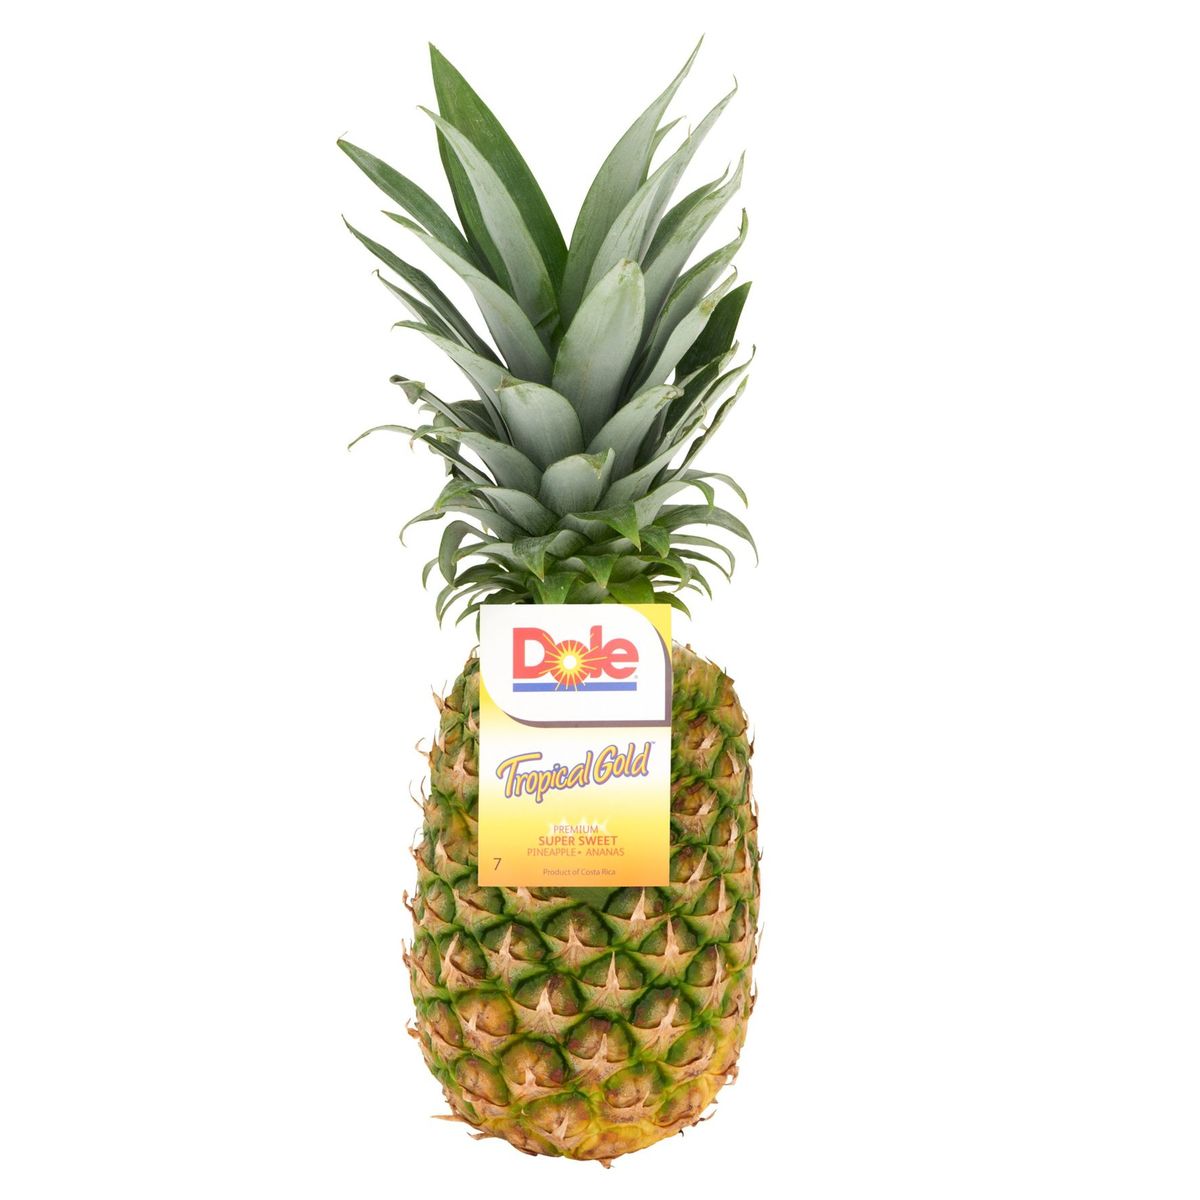 Dole Tropical Gold Premium Ananas